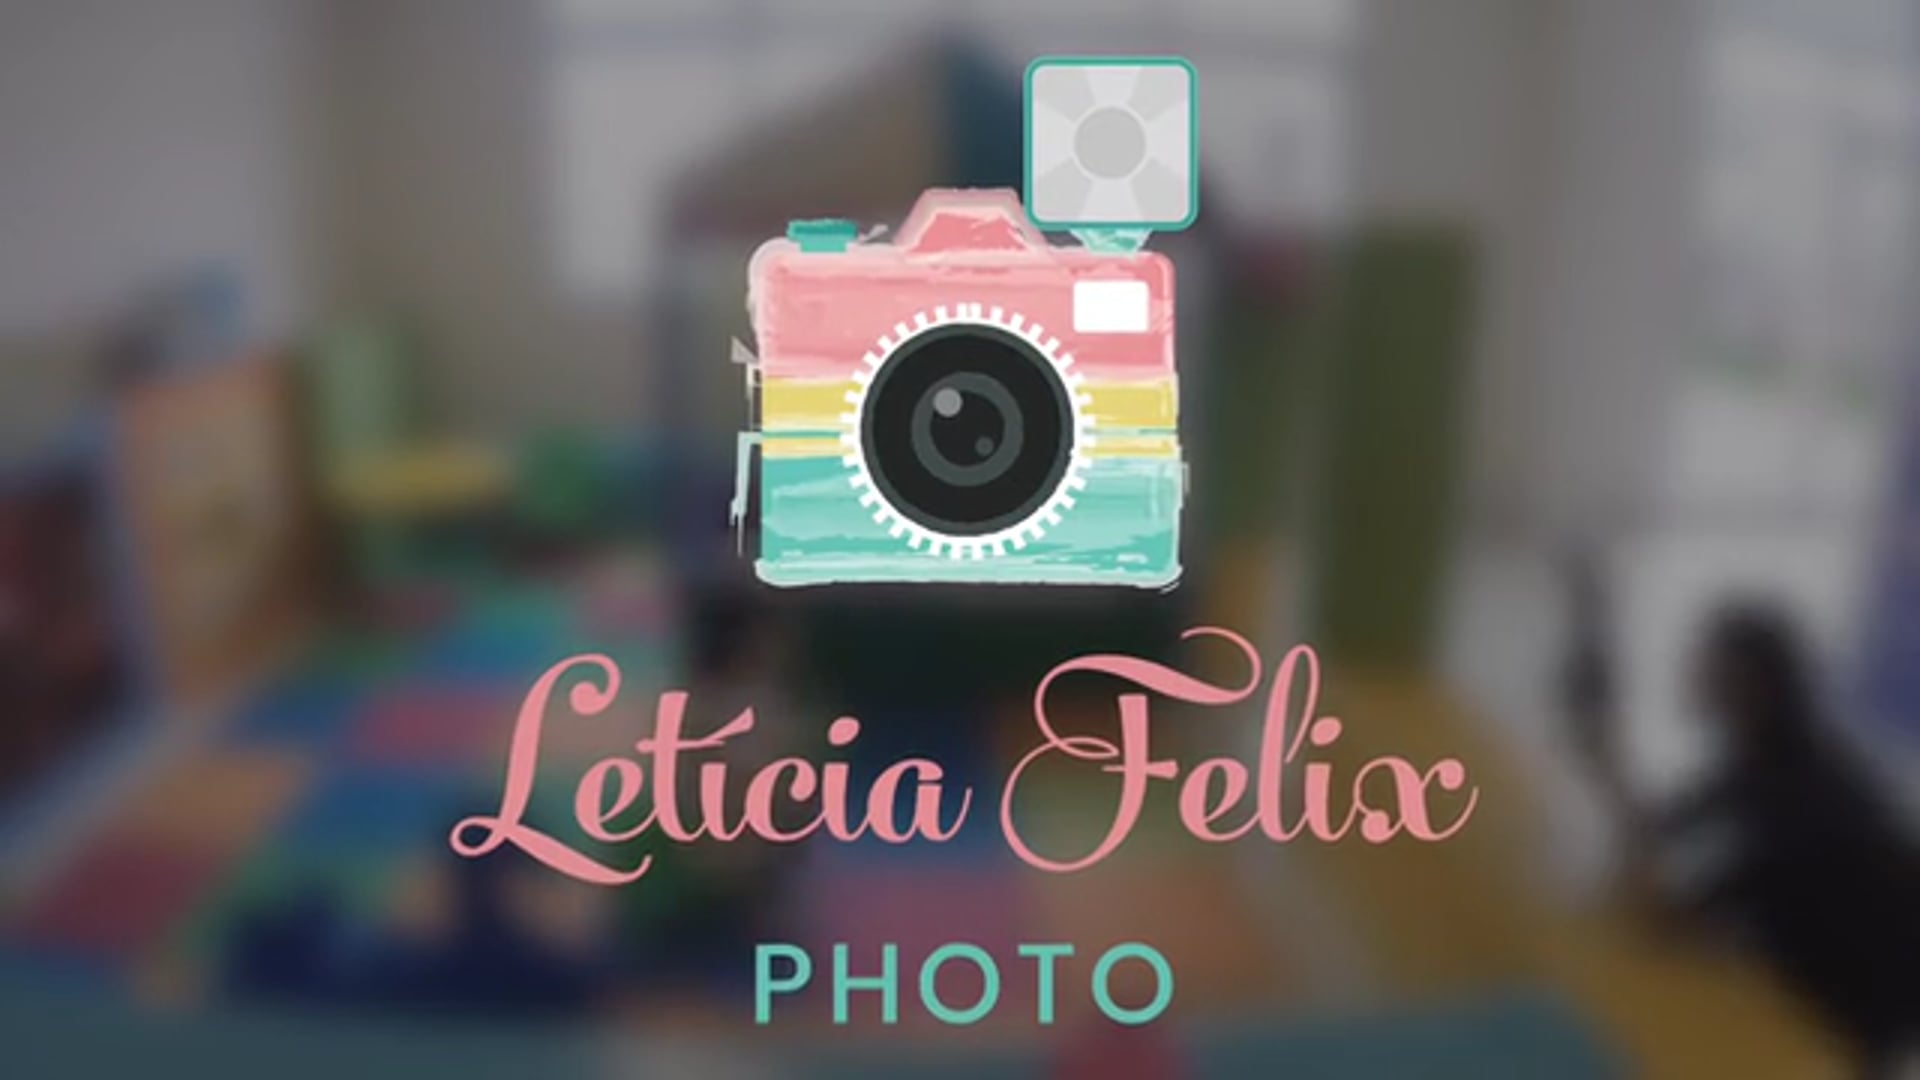 Leticia Felix Photo - Vídeo Institucional